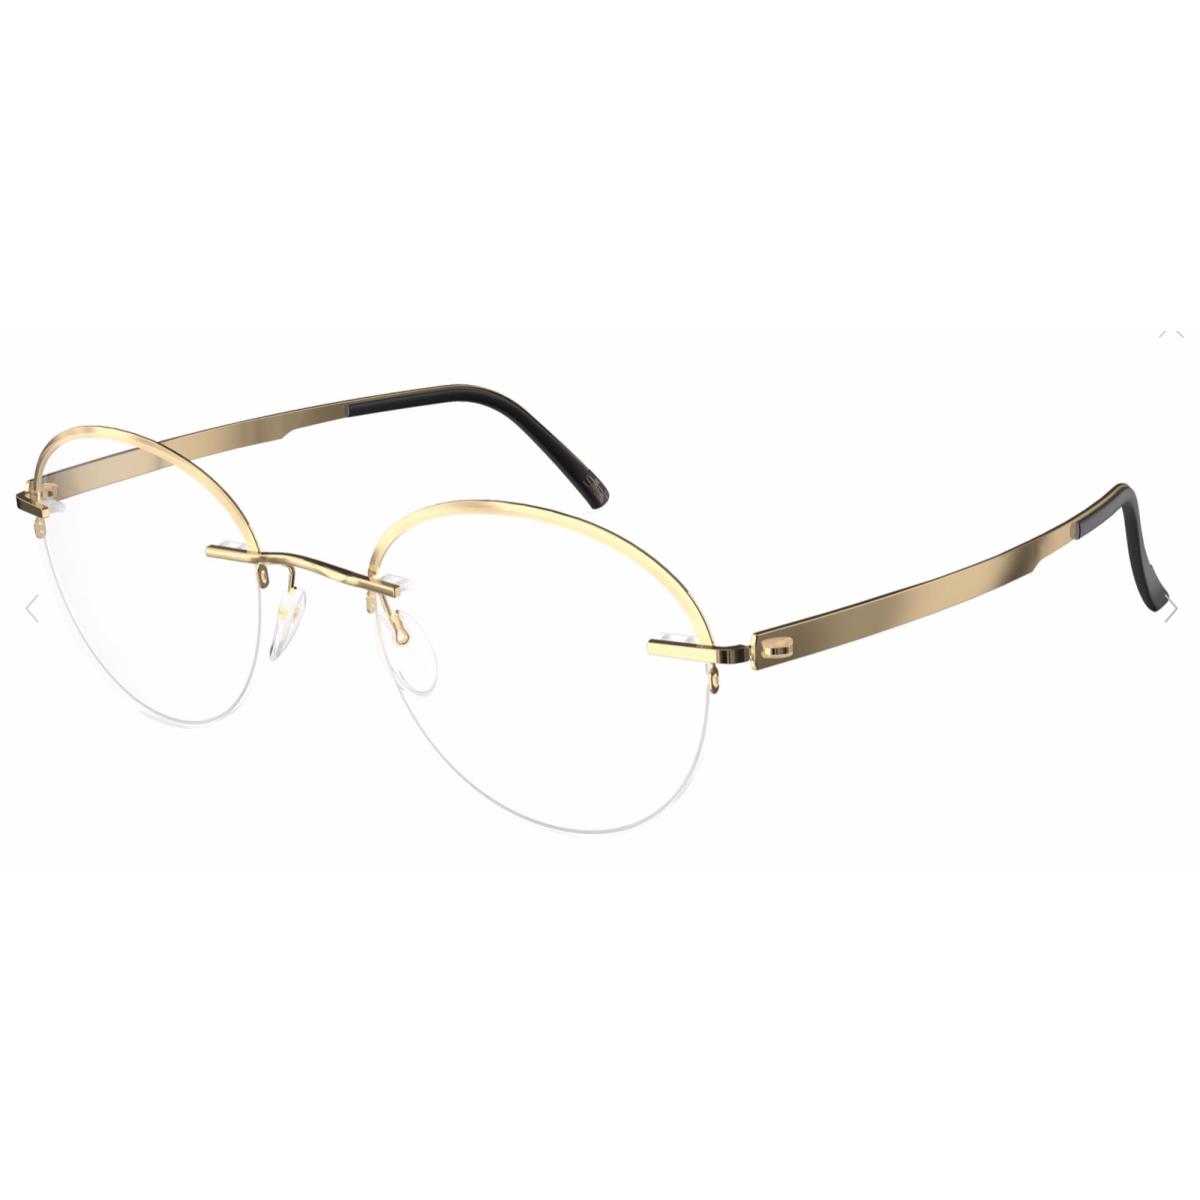 Silhouette Rimless Eyeglasses Artline 5545 JS 7520 50 23kt Gold Plated Frame